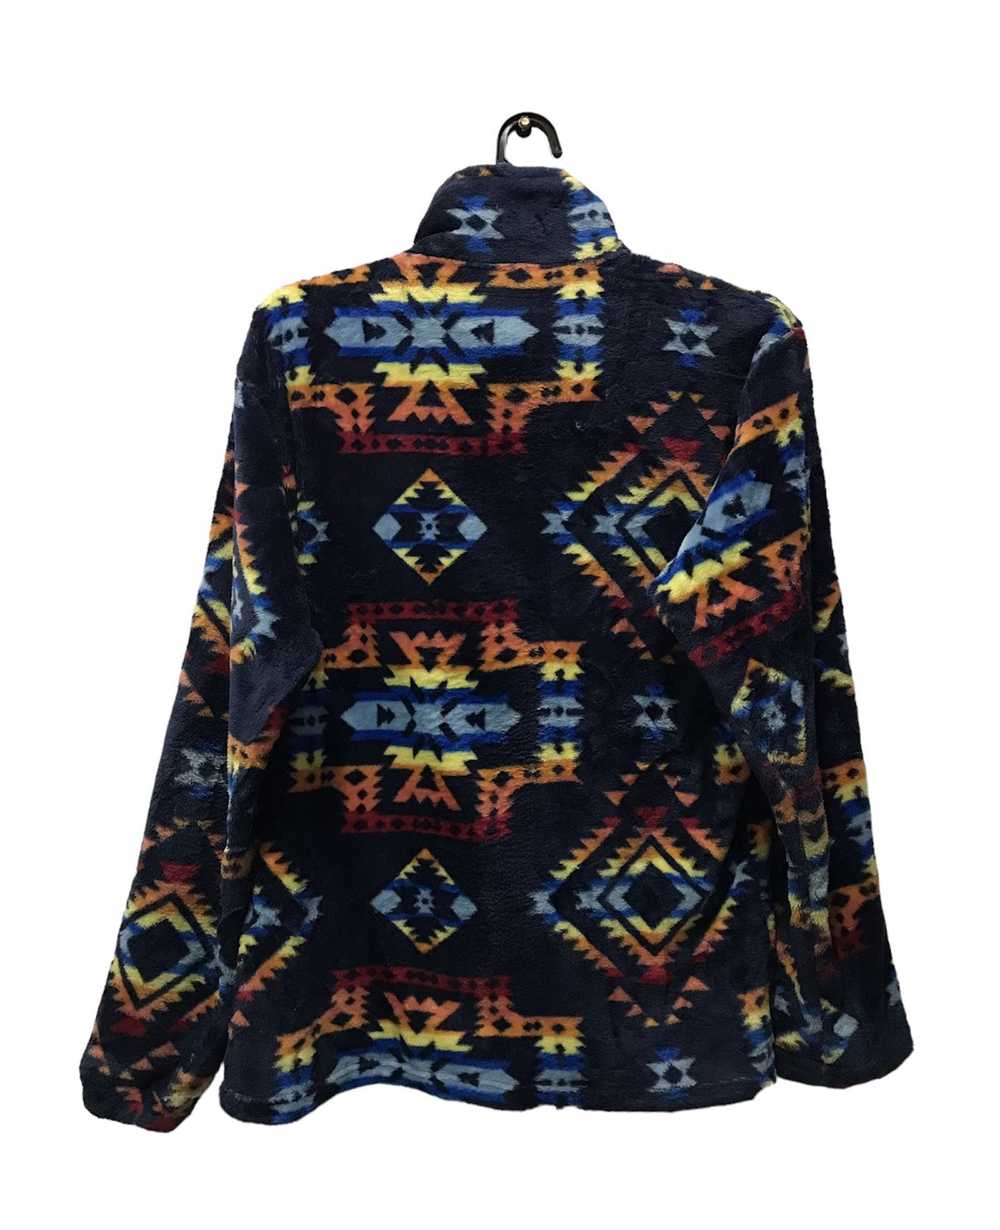 Japanese Brand Silky Fleece Jacket - image 2